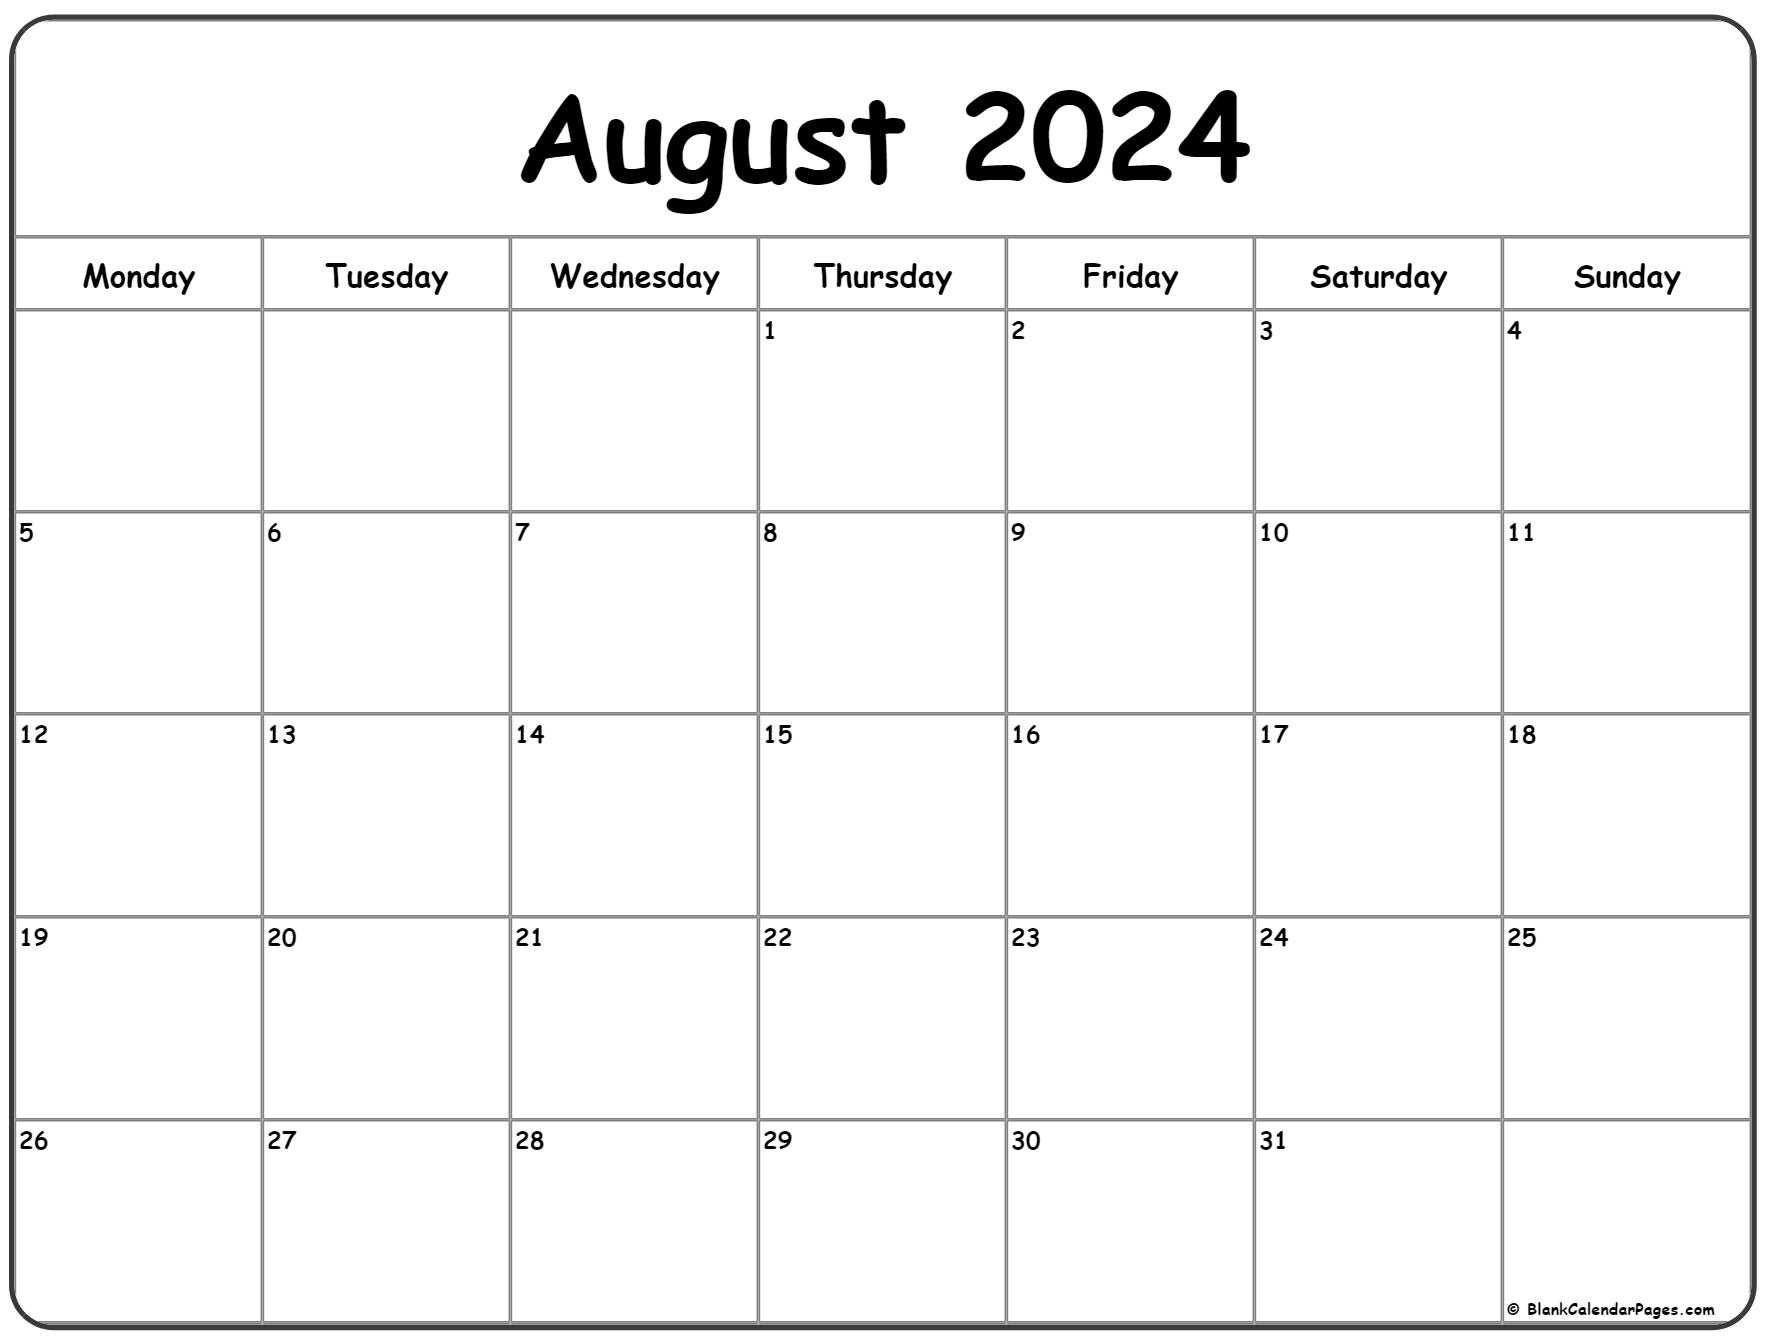 August 2024 Monday Calendar | Monday To Sunday for August 2024 Printable Calendar